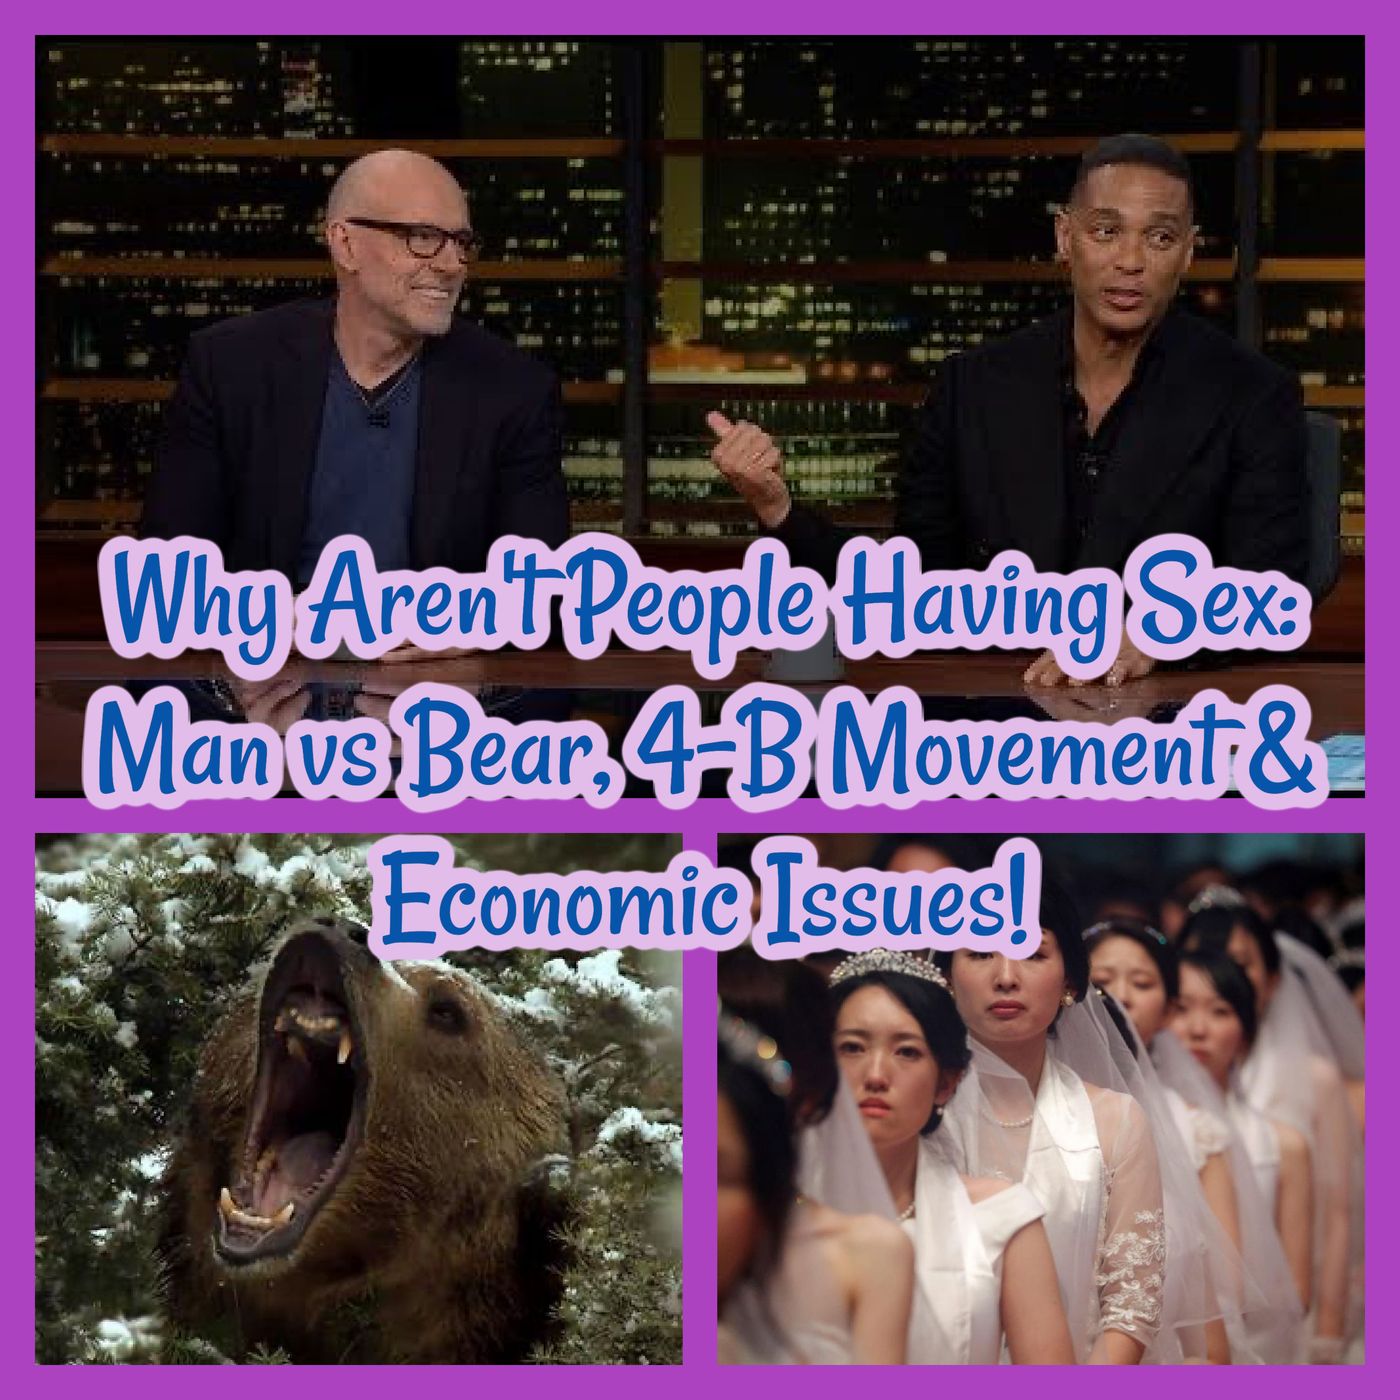 Why Aren’t People Having Sex: Man vs Bear, 4-B Movement & Economic Issues!